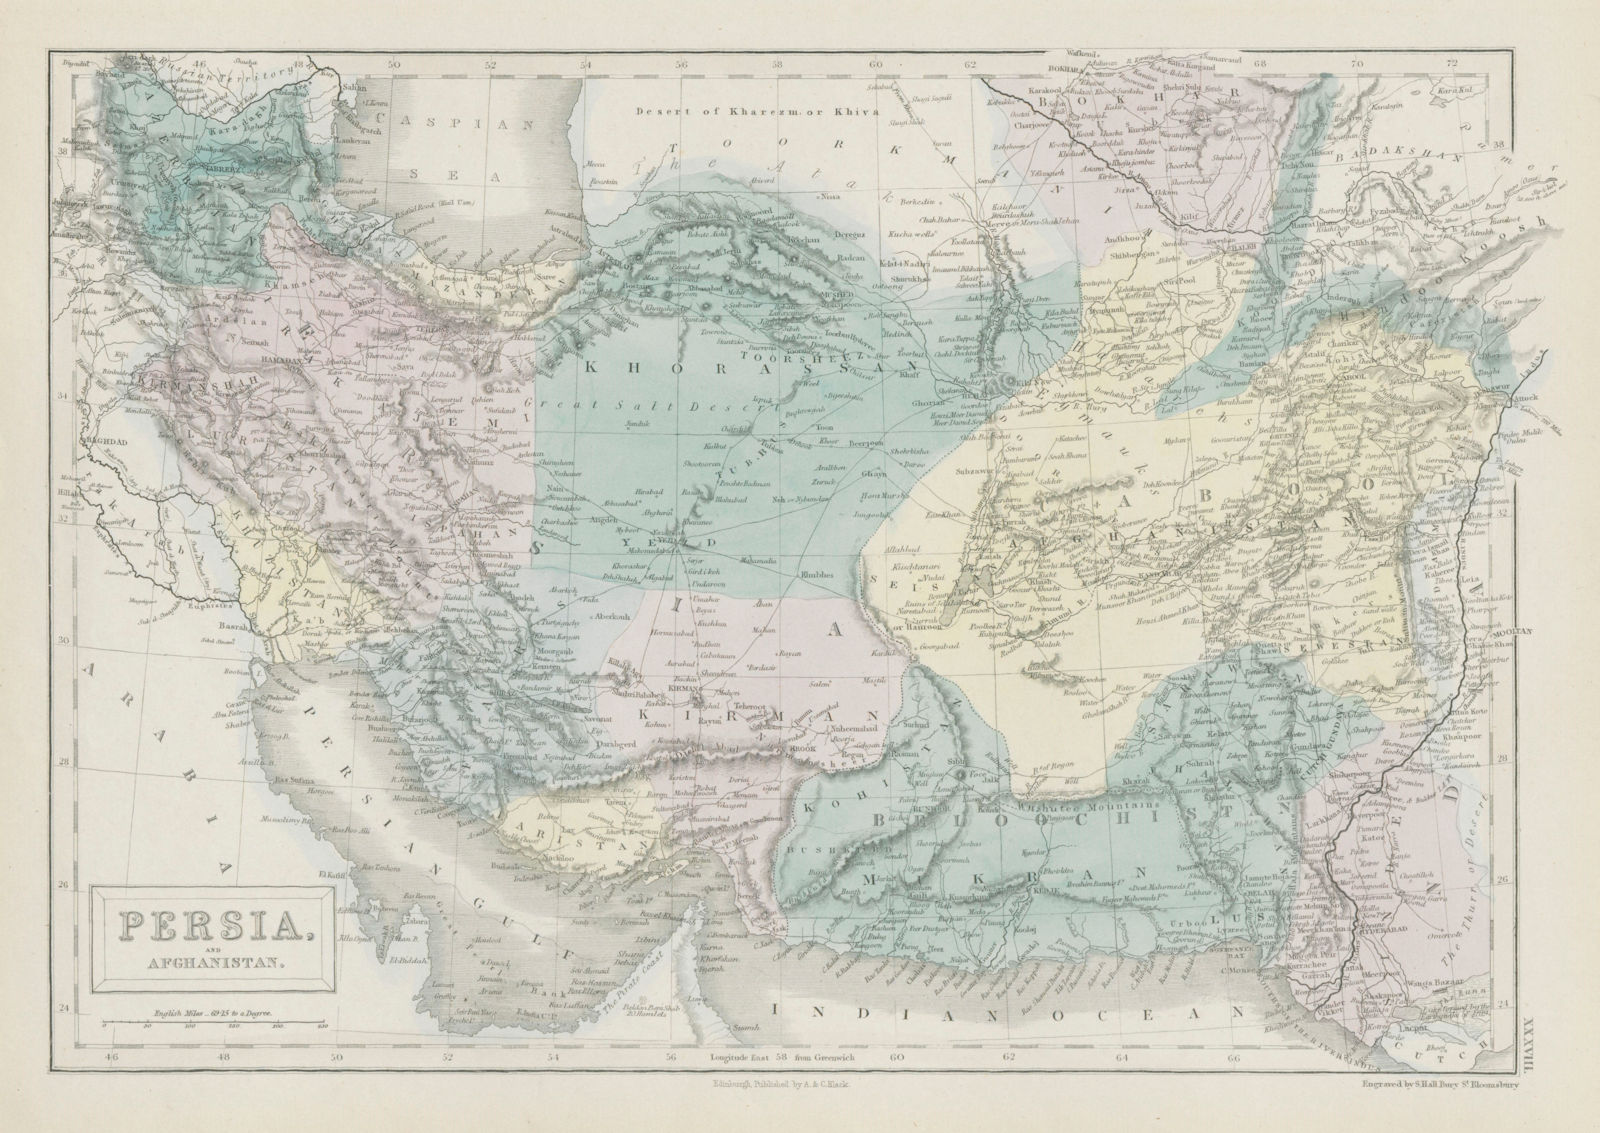 Associate Product Persia & Afghanistan. Iran SW Asia Pirate Coast 'Debai' (Dubai) HALL 1856 map